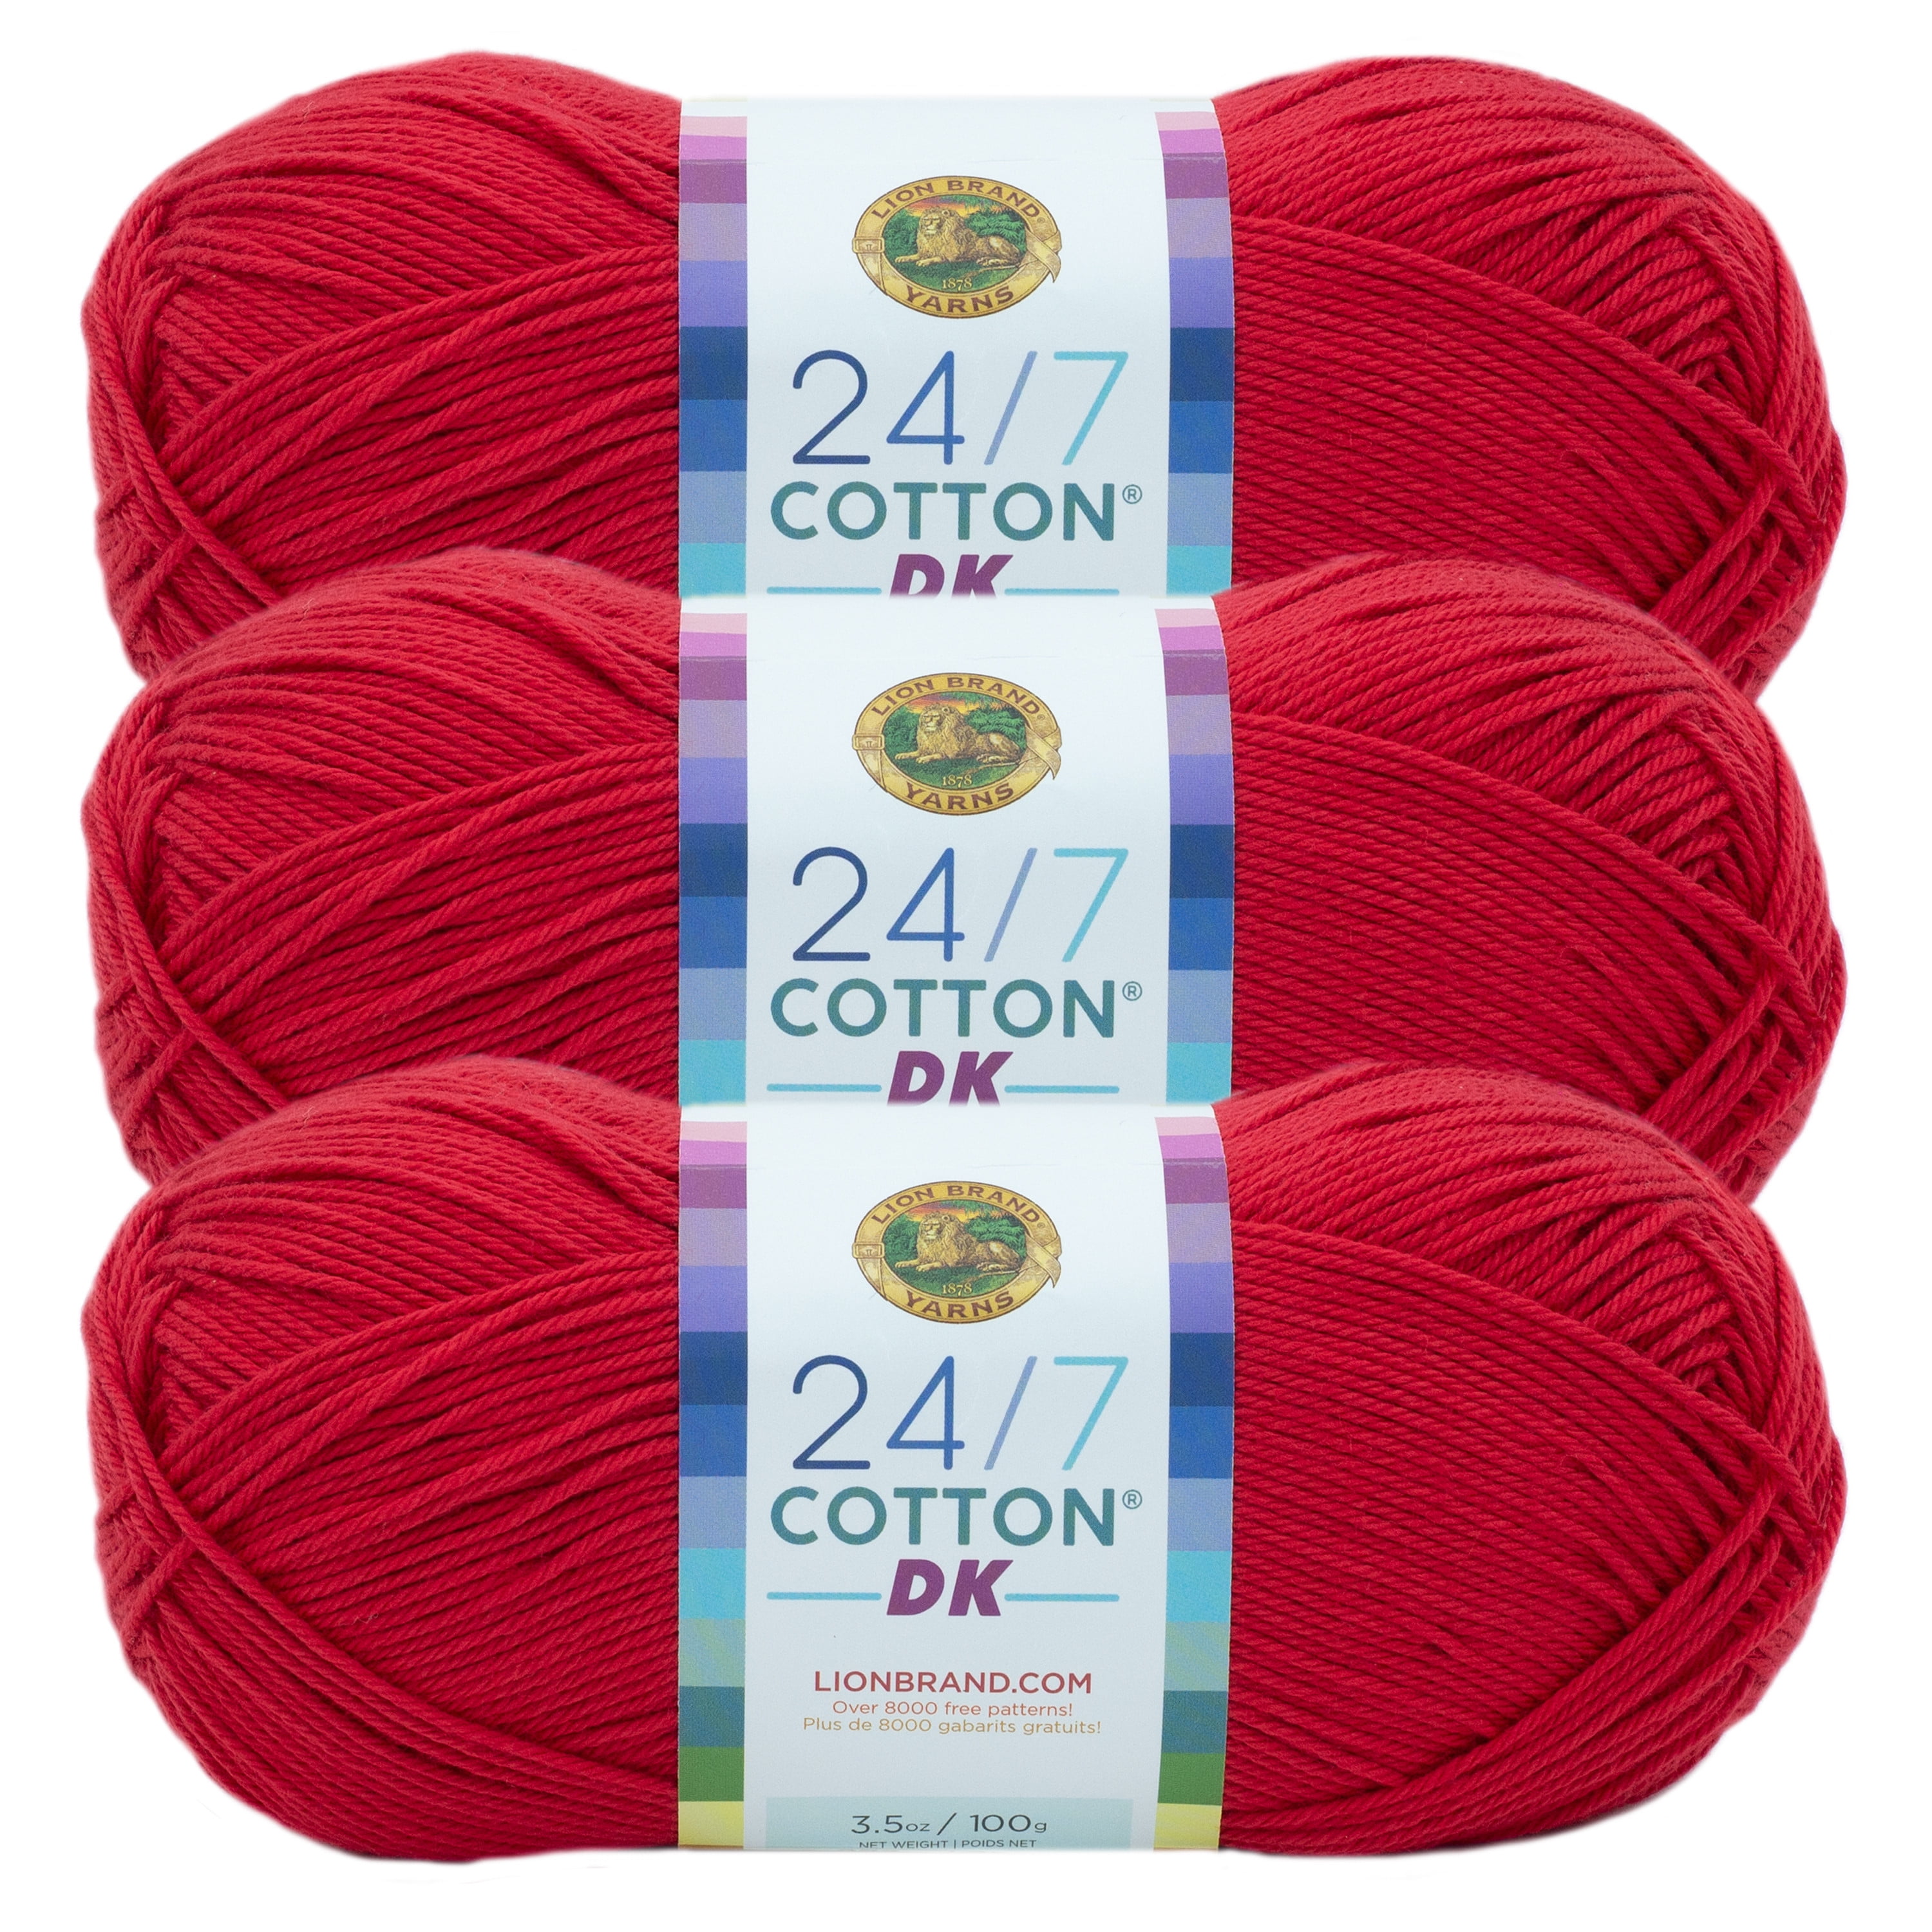 Lion Brand Yarn Comfy Cotton Blend Poppy Varigated Light Cotton, Polyester  Red Yarn 3 Pack